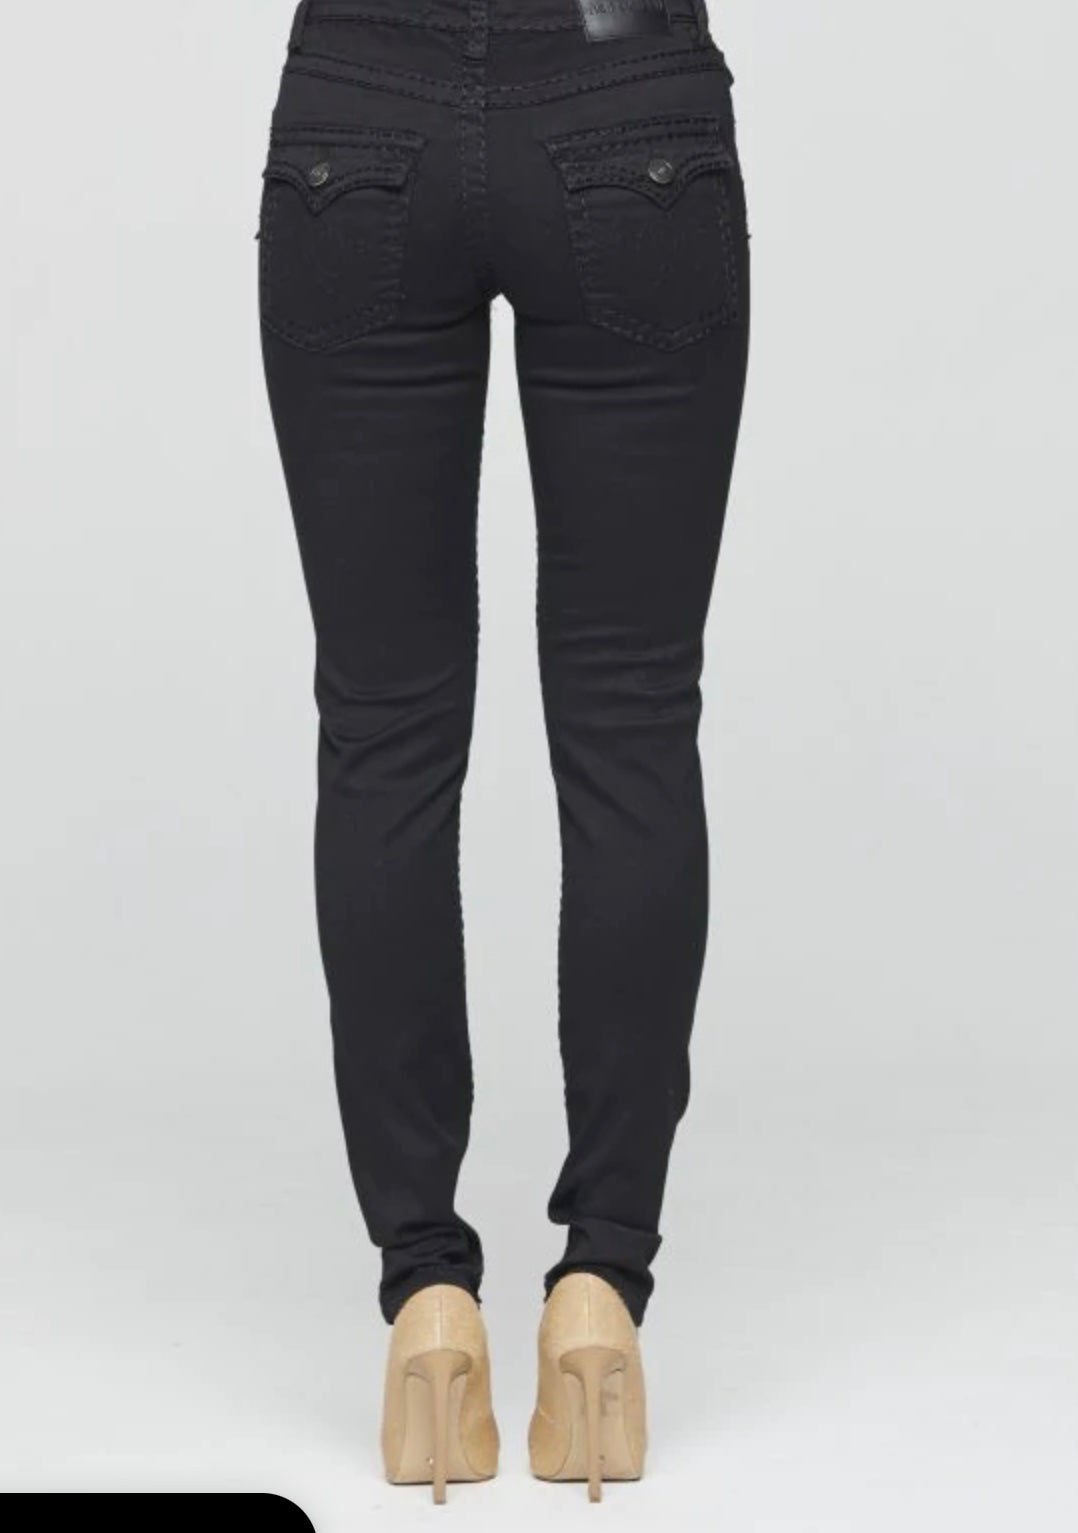 New London Jeans Chelsea Black